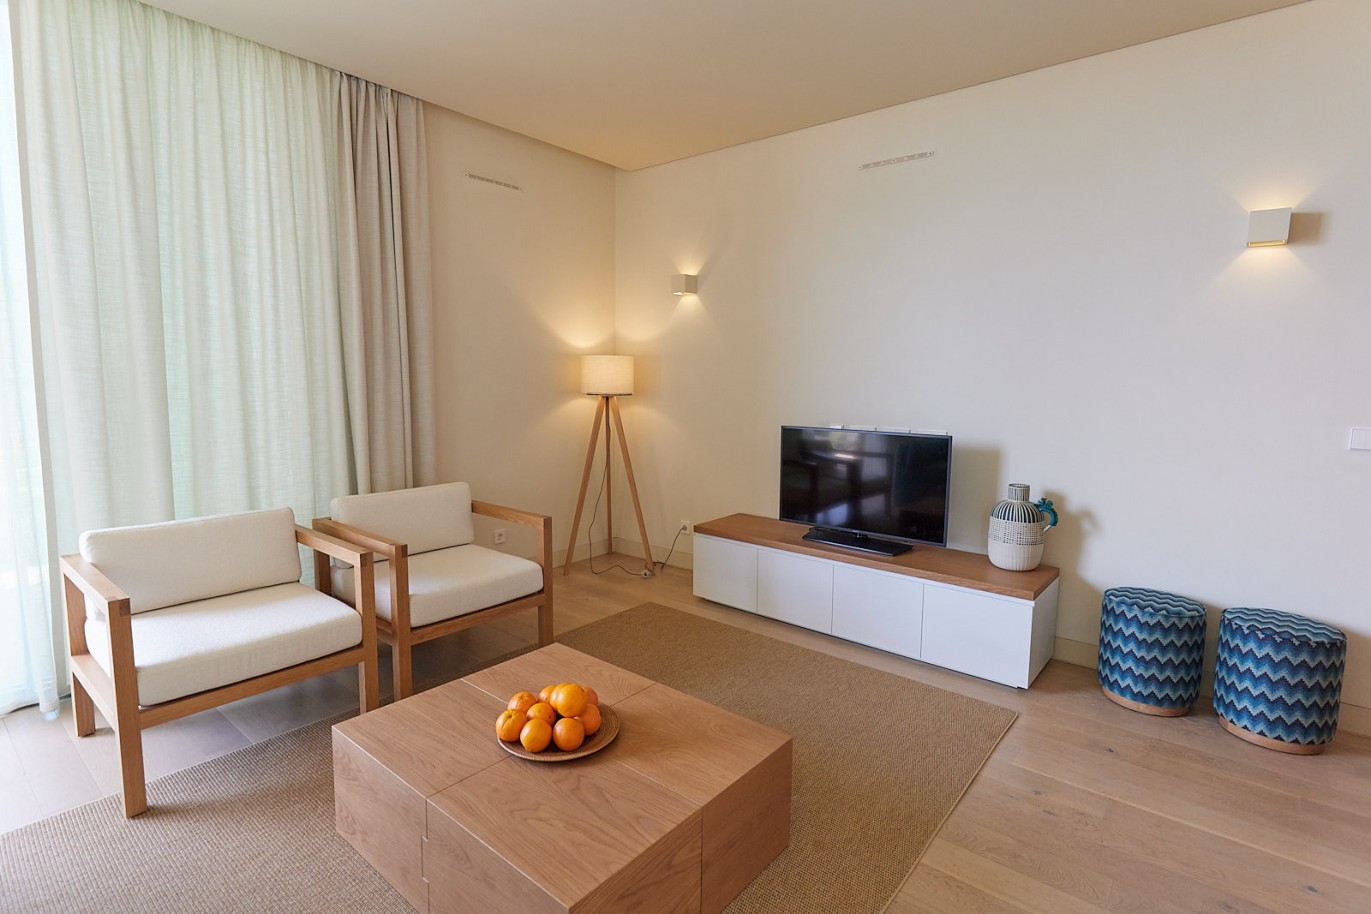 2 bedroom apartment in resort, for sale in Porches, Algarve_228729